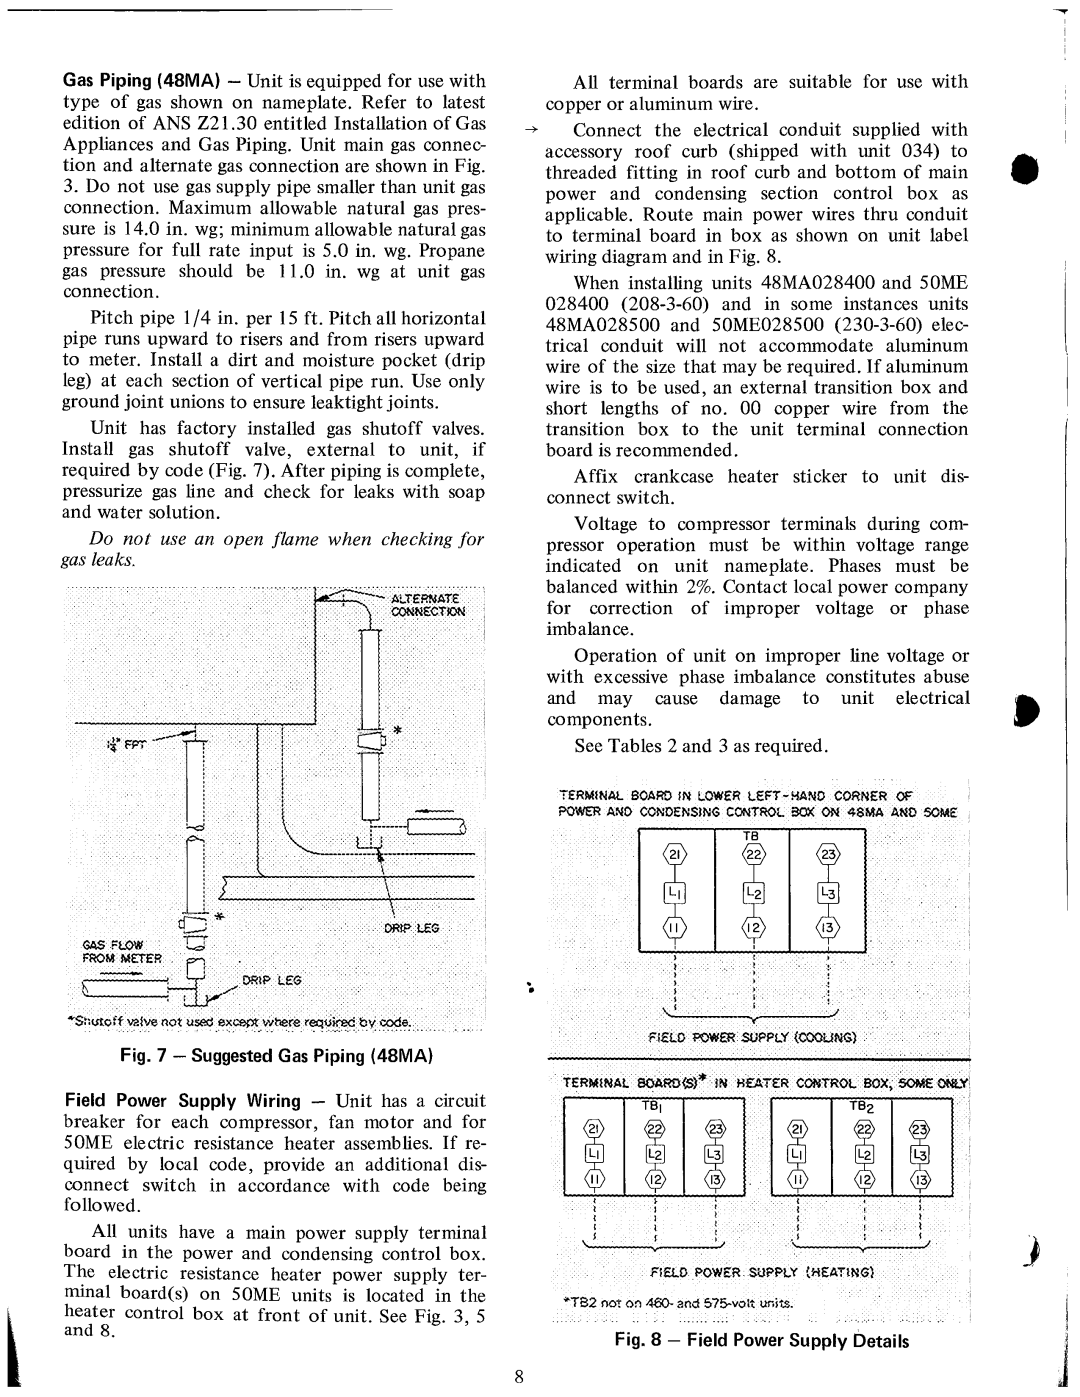 Carrier 48MA, 50ME manual 